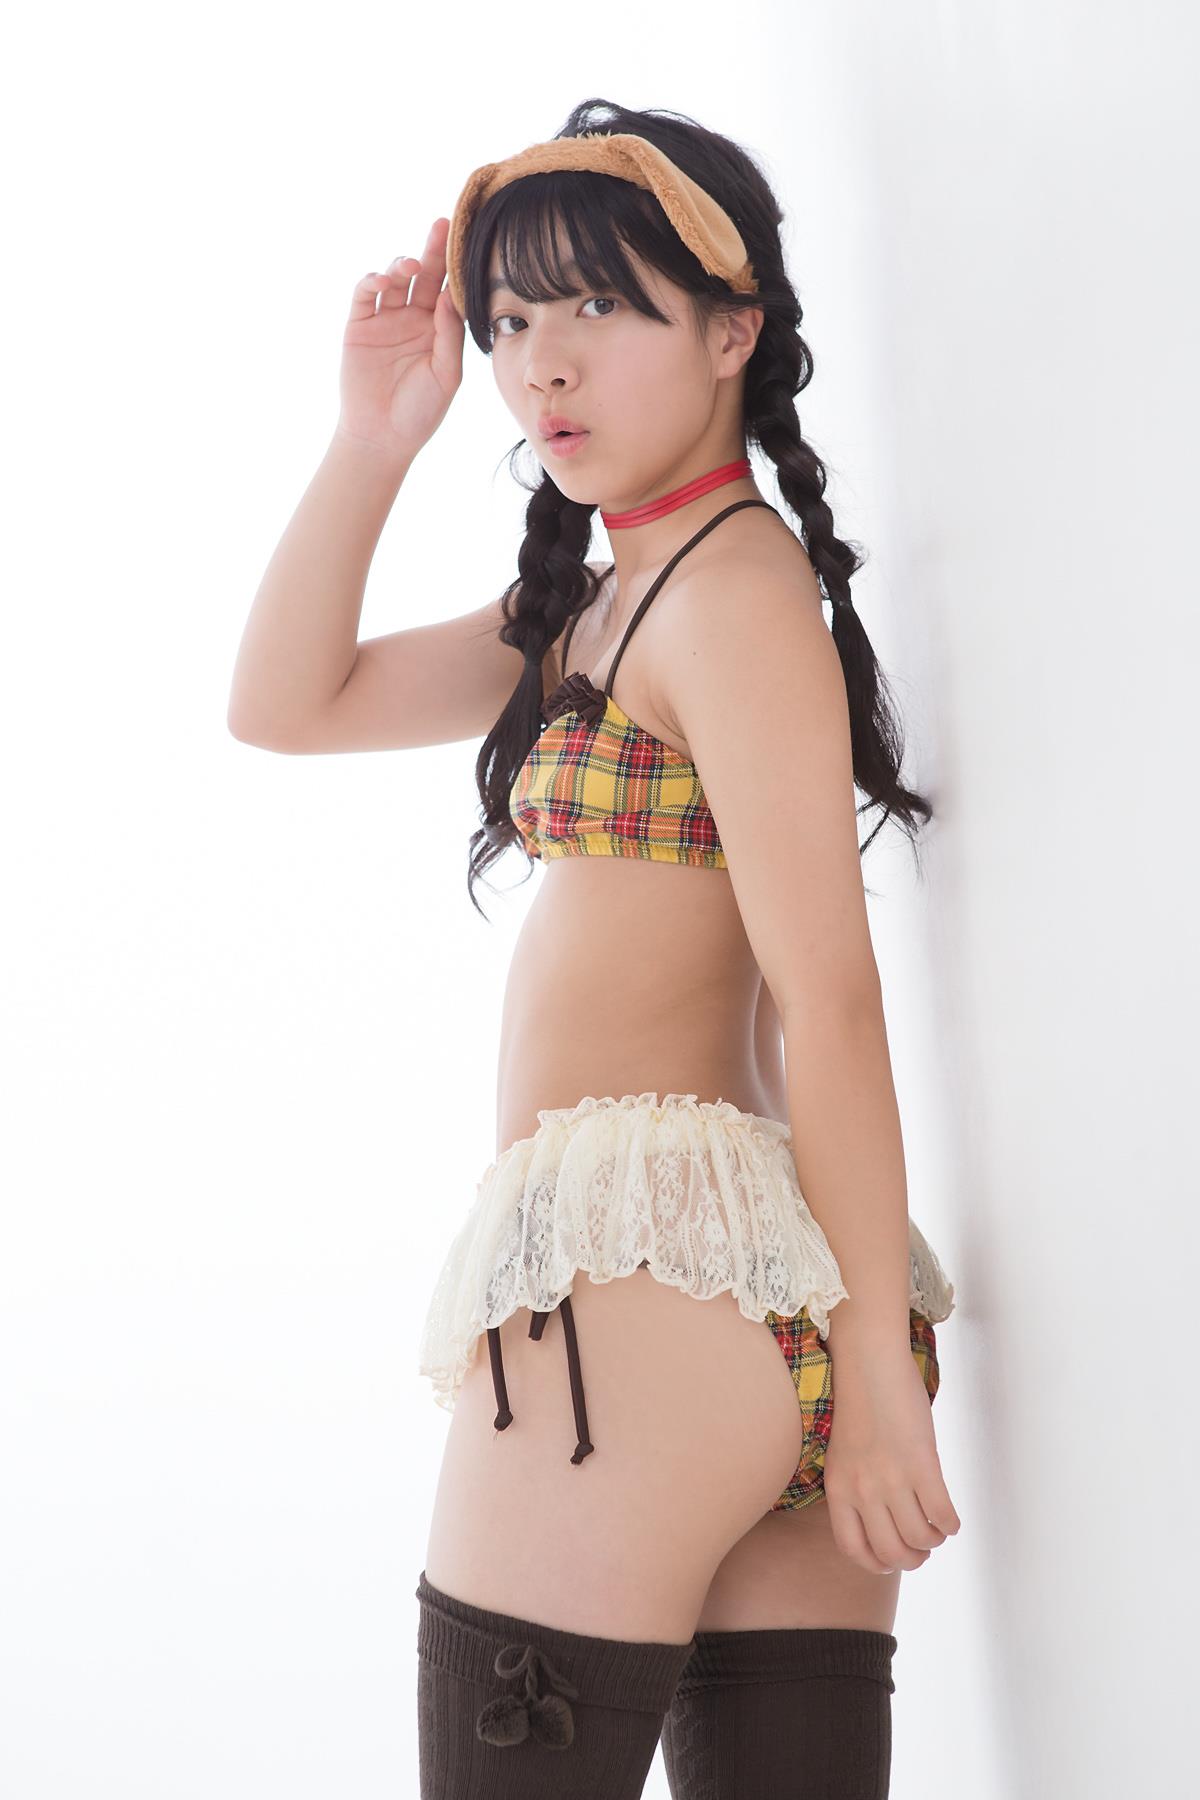 Minisuka.tv Saria Natsume 夏目咲莉愛 - Premium Gallery 2.5 - 29.jpg